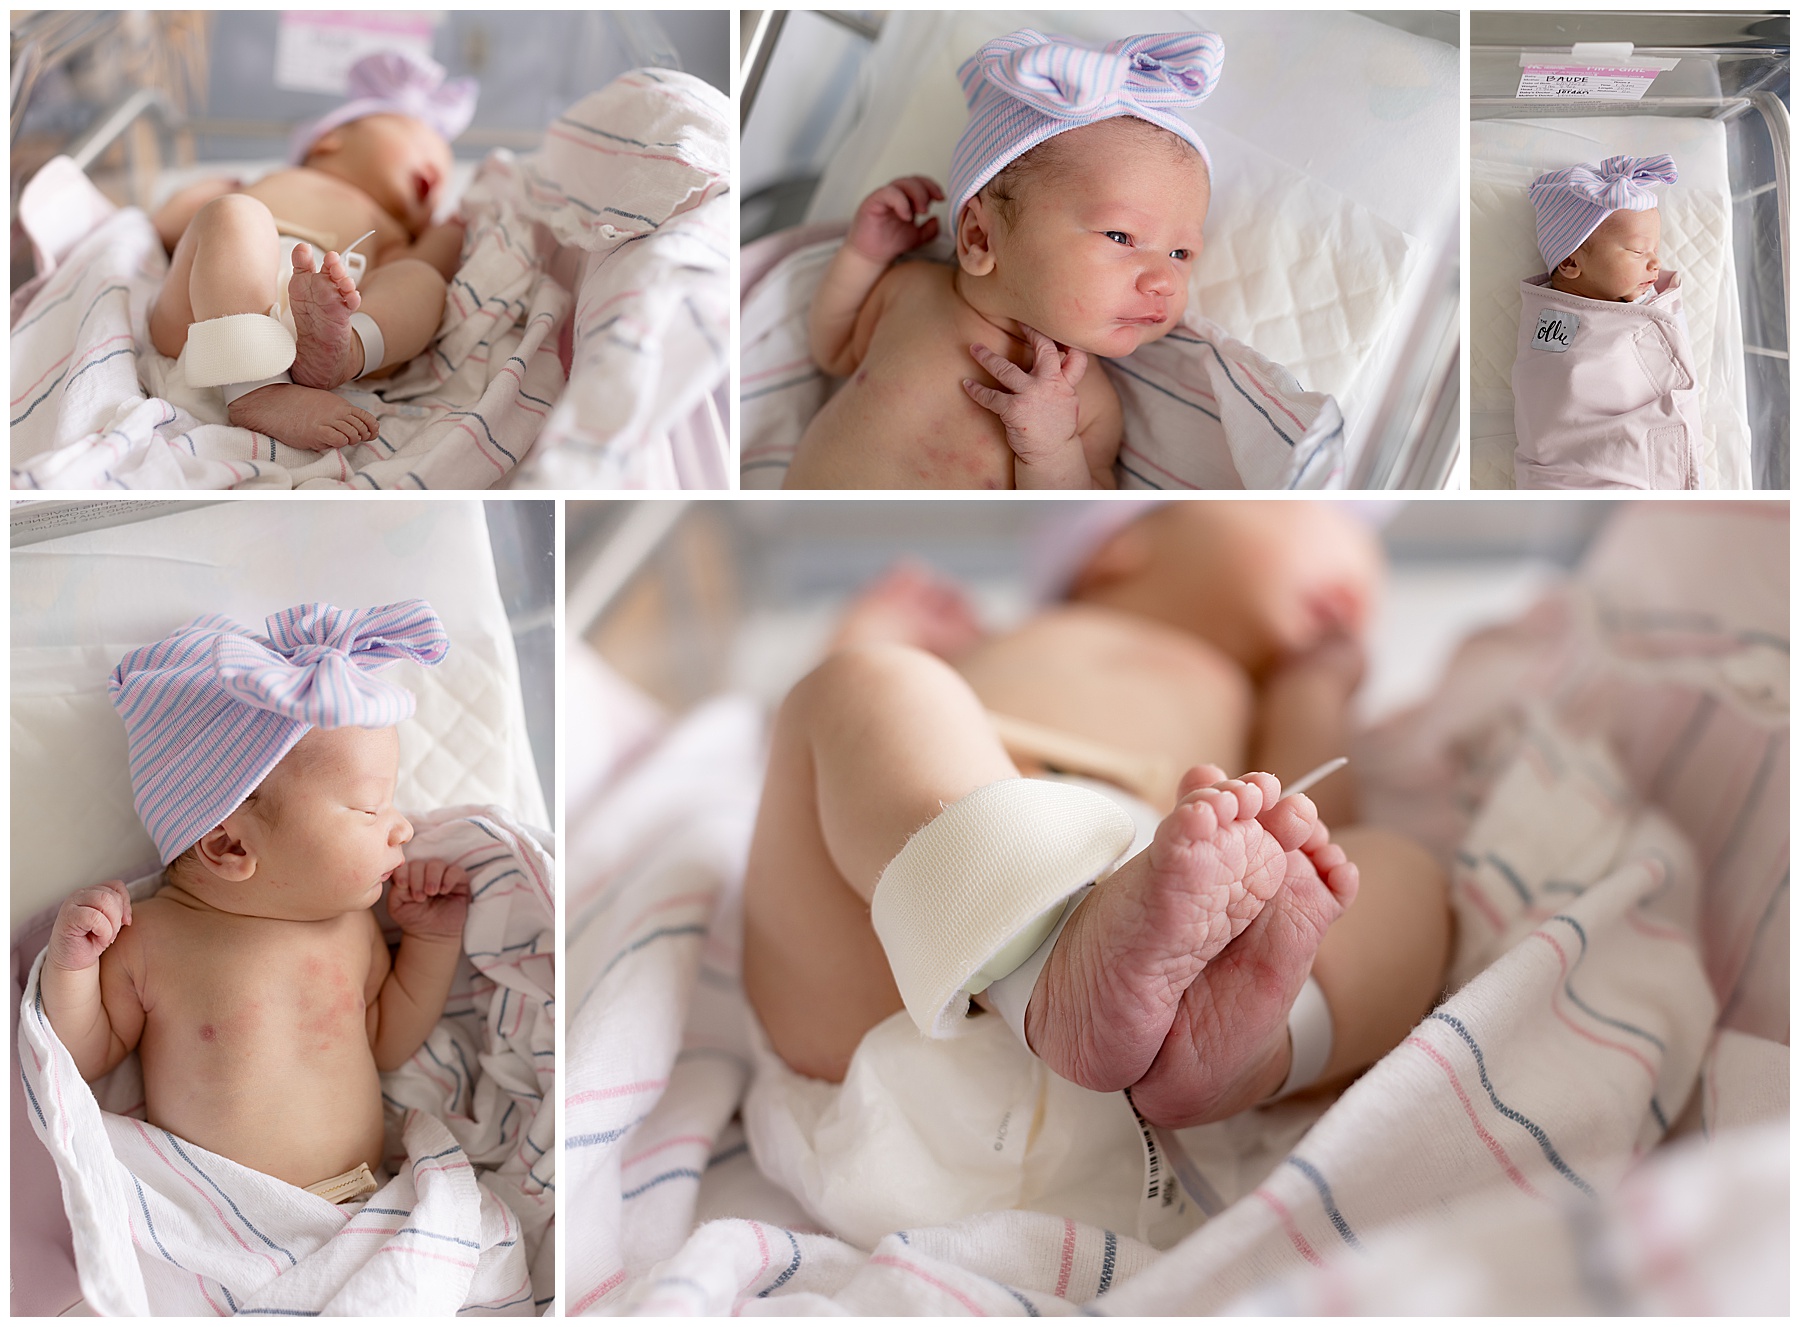 Fresh 48 baby photoshoot - newborn in hospital bassinet